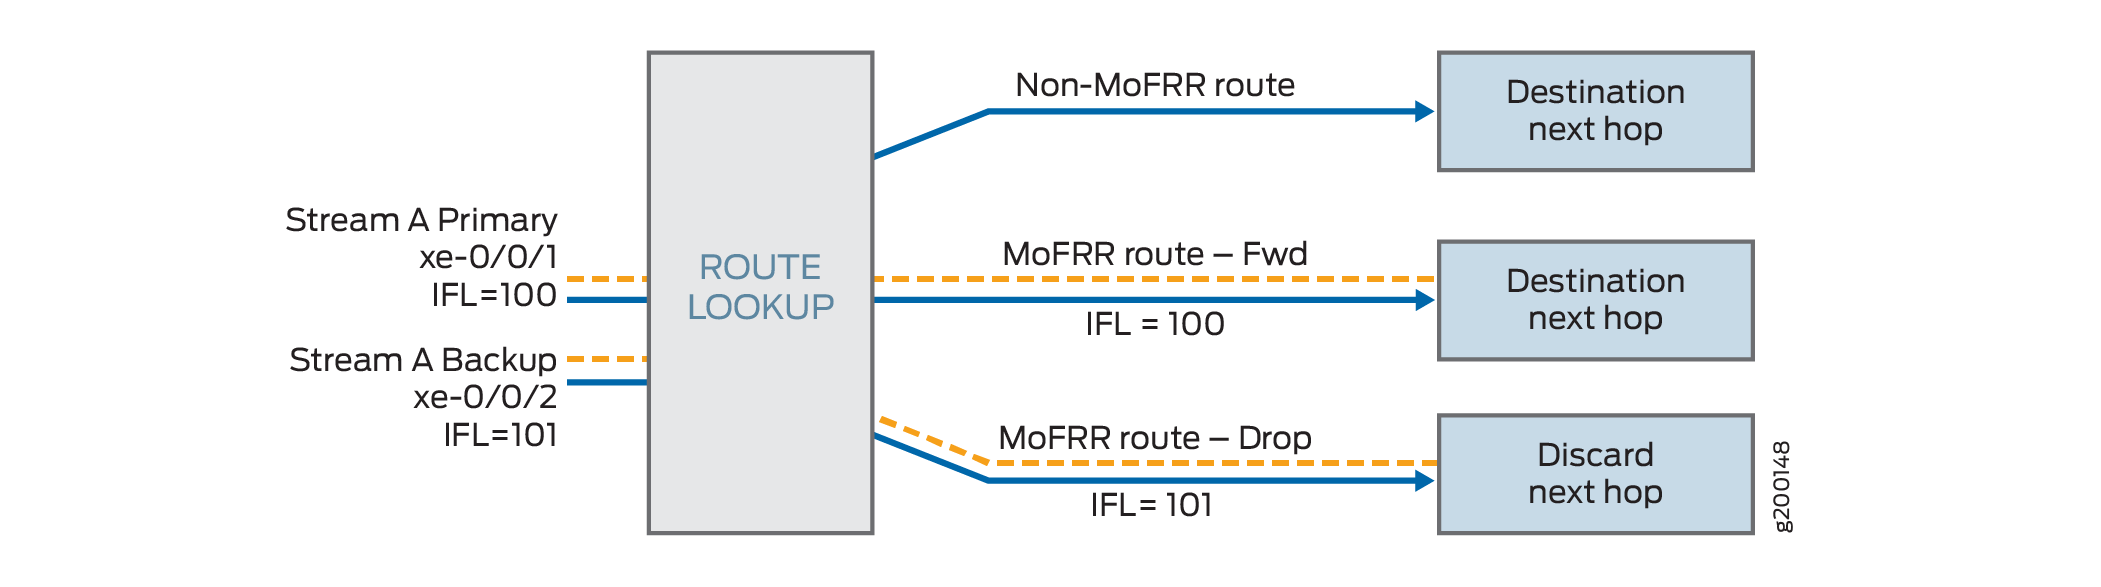 Manejo de ruta IP MoFRR en el motor de reenvío de paquetes en conmutadores